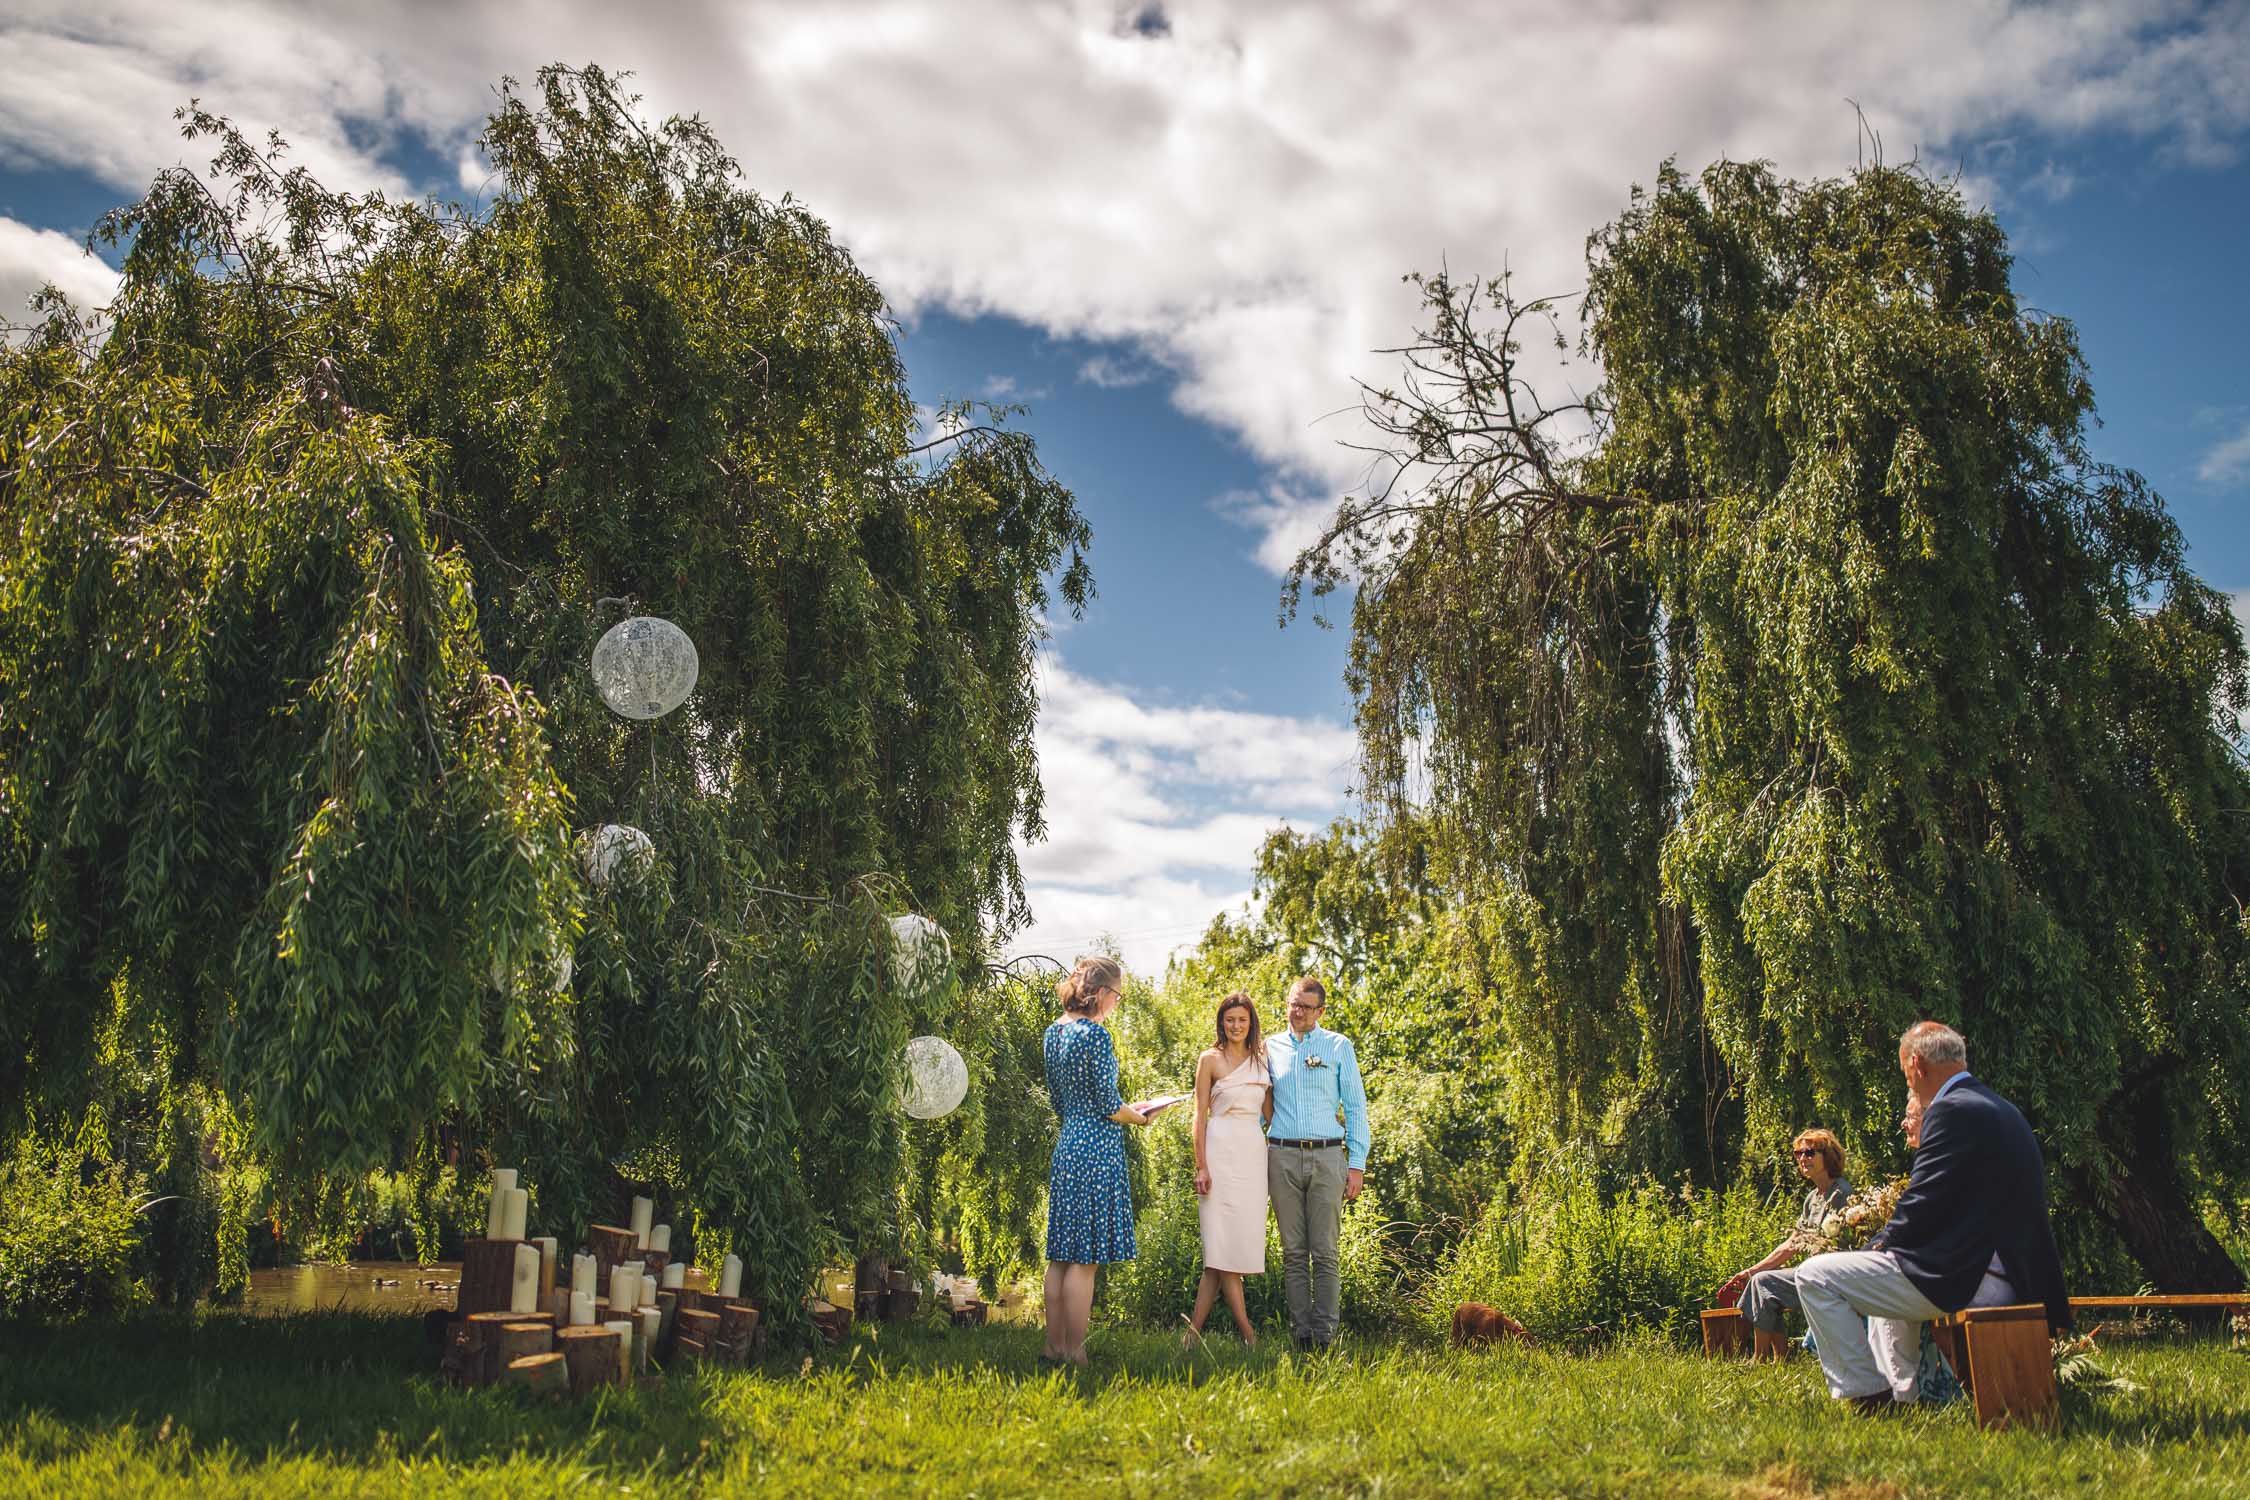 The Orchard at Munsley, Wedding Photography, Wedding at the Orchard at Munsley, Herefordshire wedding photographer, wedding photography  in Herefordshire